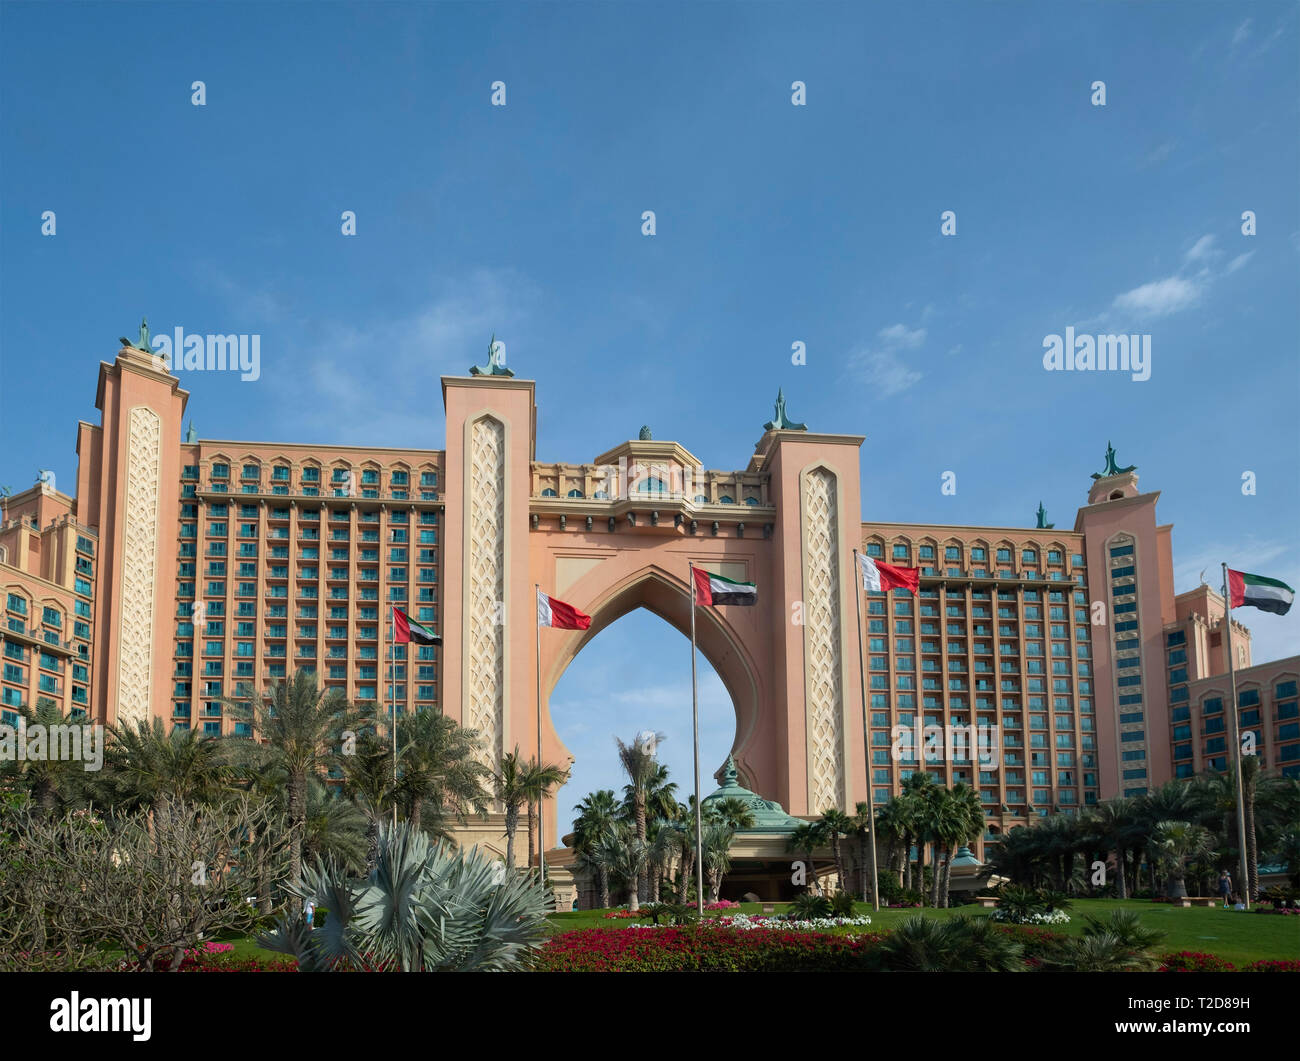 Atlantis The Palm Hotel in Dubai, United Arab Emirates Stock Photo